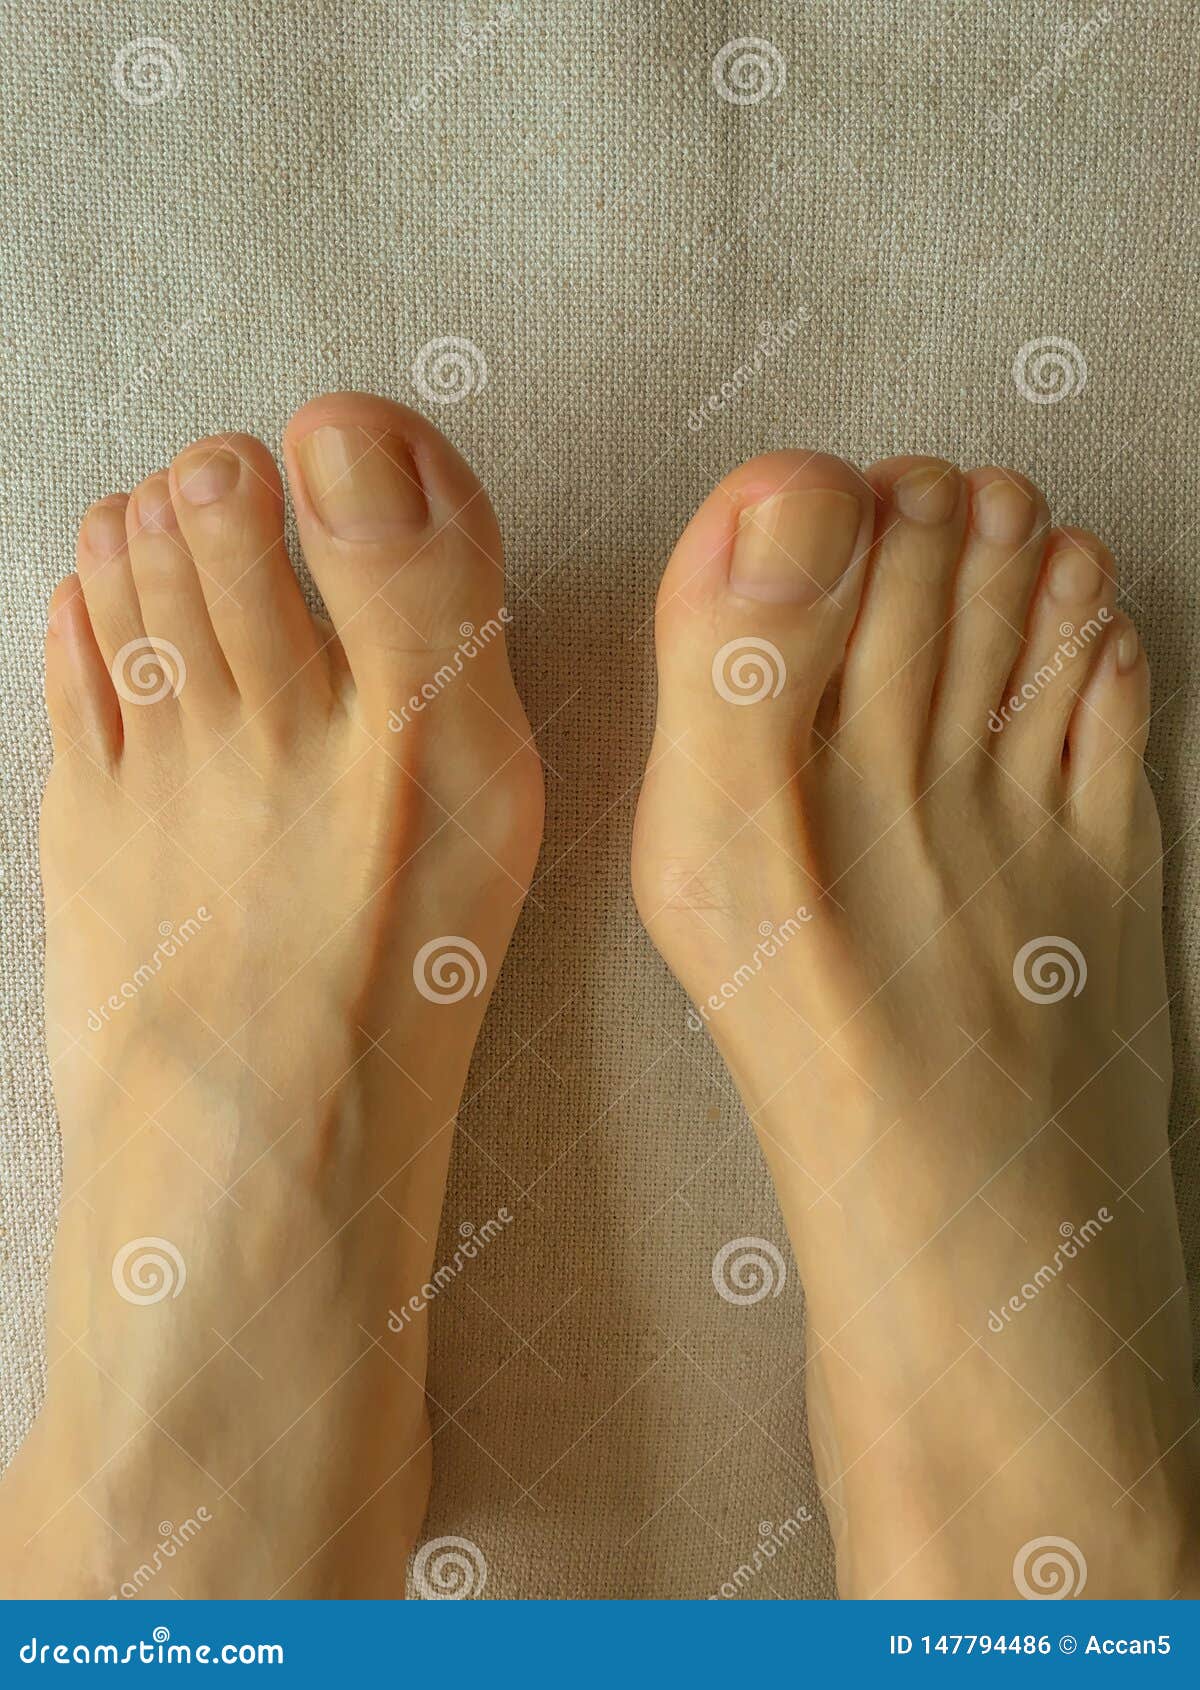 Top Viewand Closeup Photo of Woman Feet and Natural Toenails without Nail  Polish Stock Photo - Image of home, closeup: 147794486